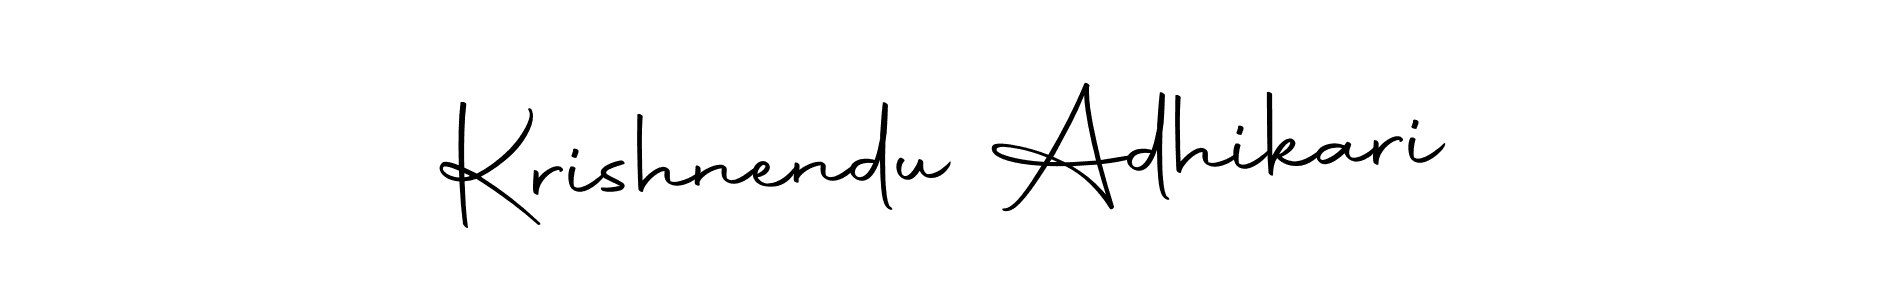 Make a beautiful signature design for name Krishnendu Adhikari. Use this online signature maker to create a handwritten signature for free. Krishnendu Adhikari signature style 10 images and pictures png